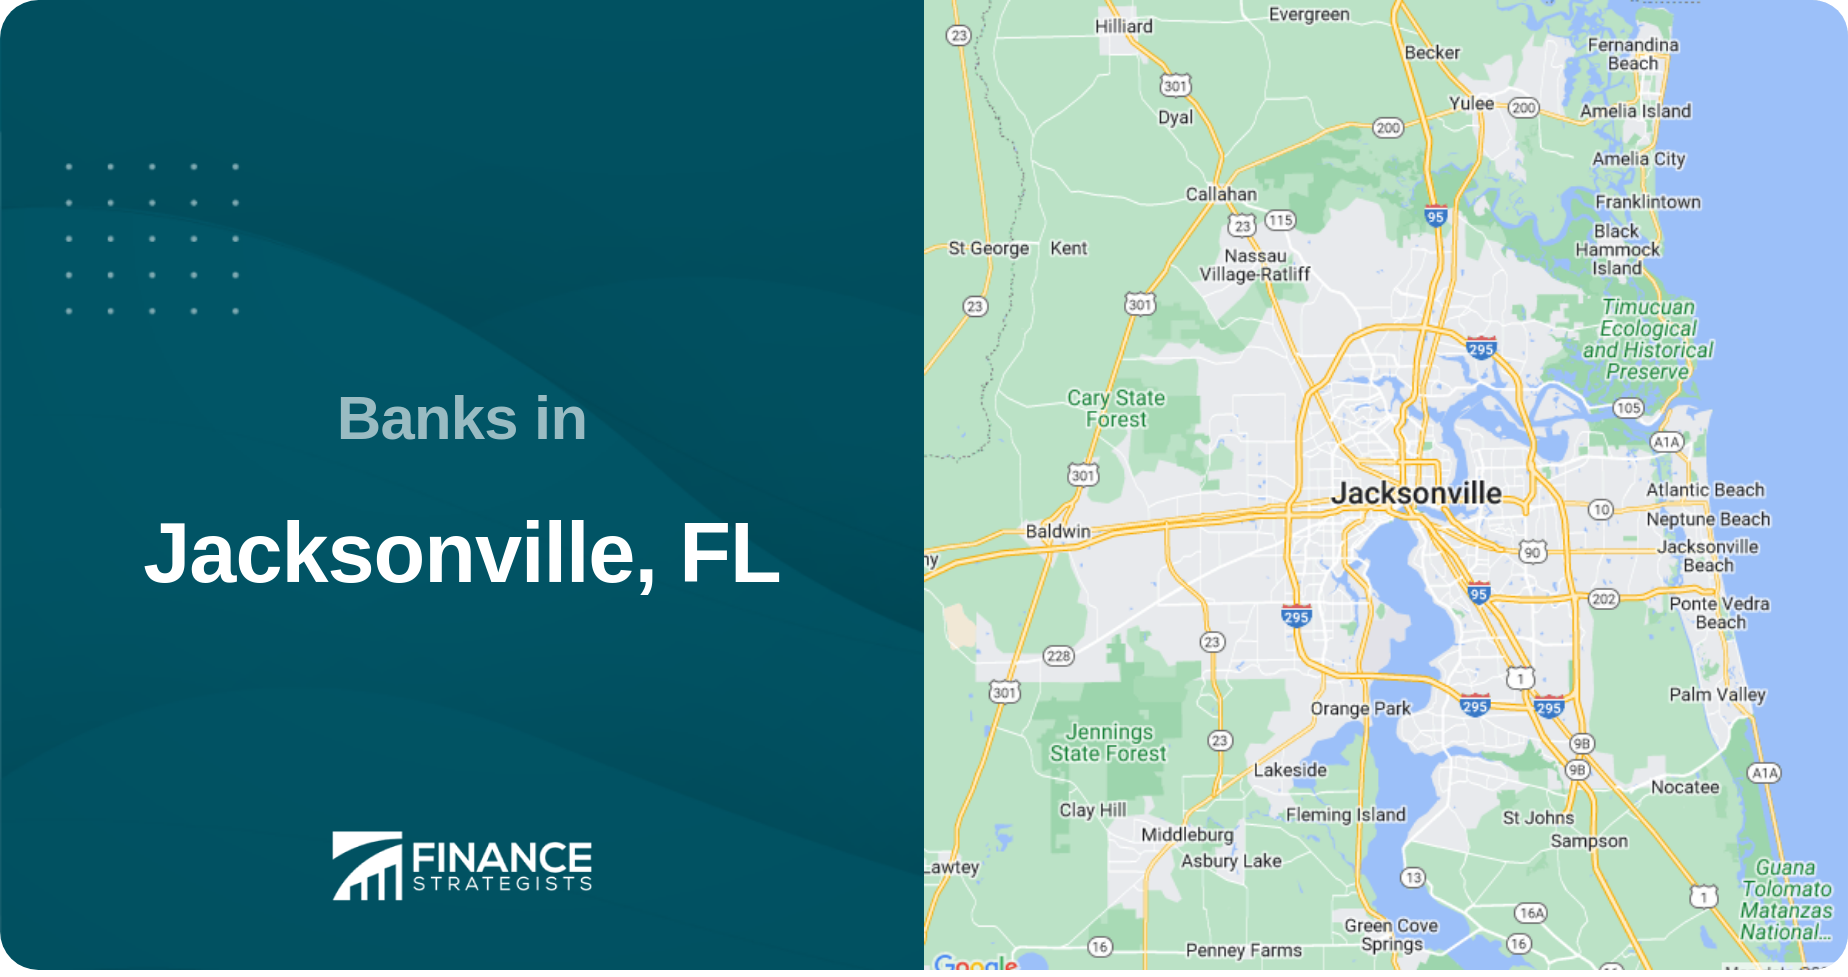 Banks in Jacksonville, FL